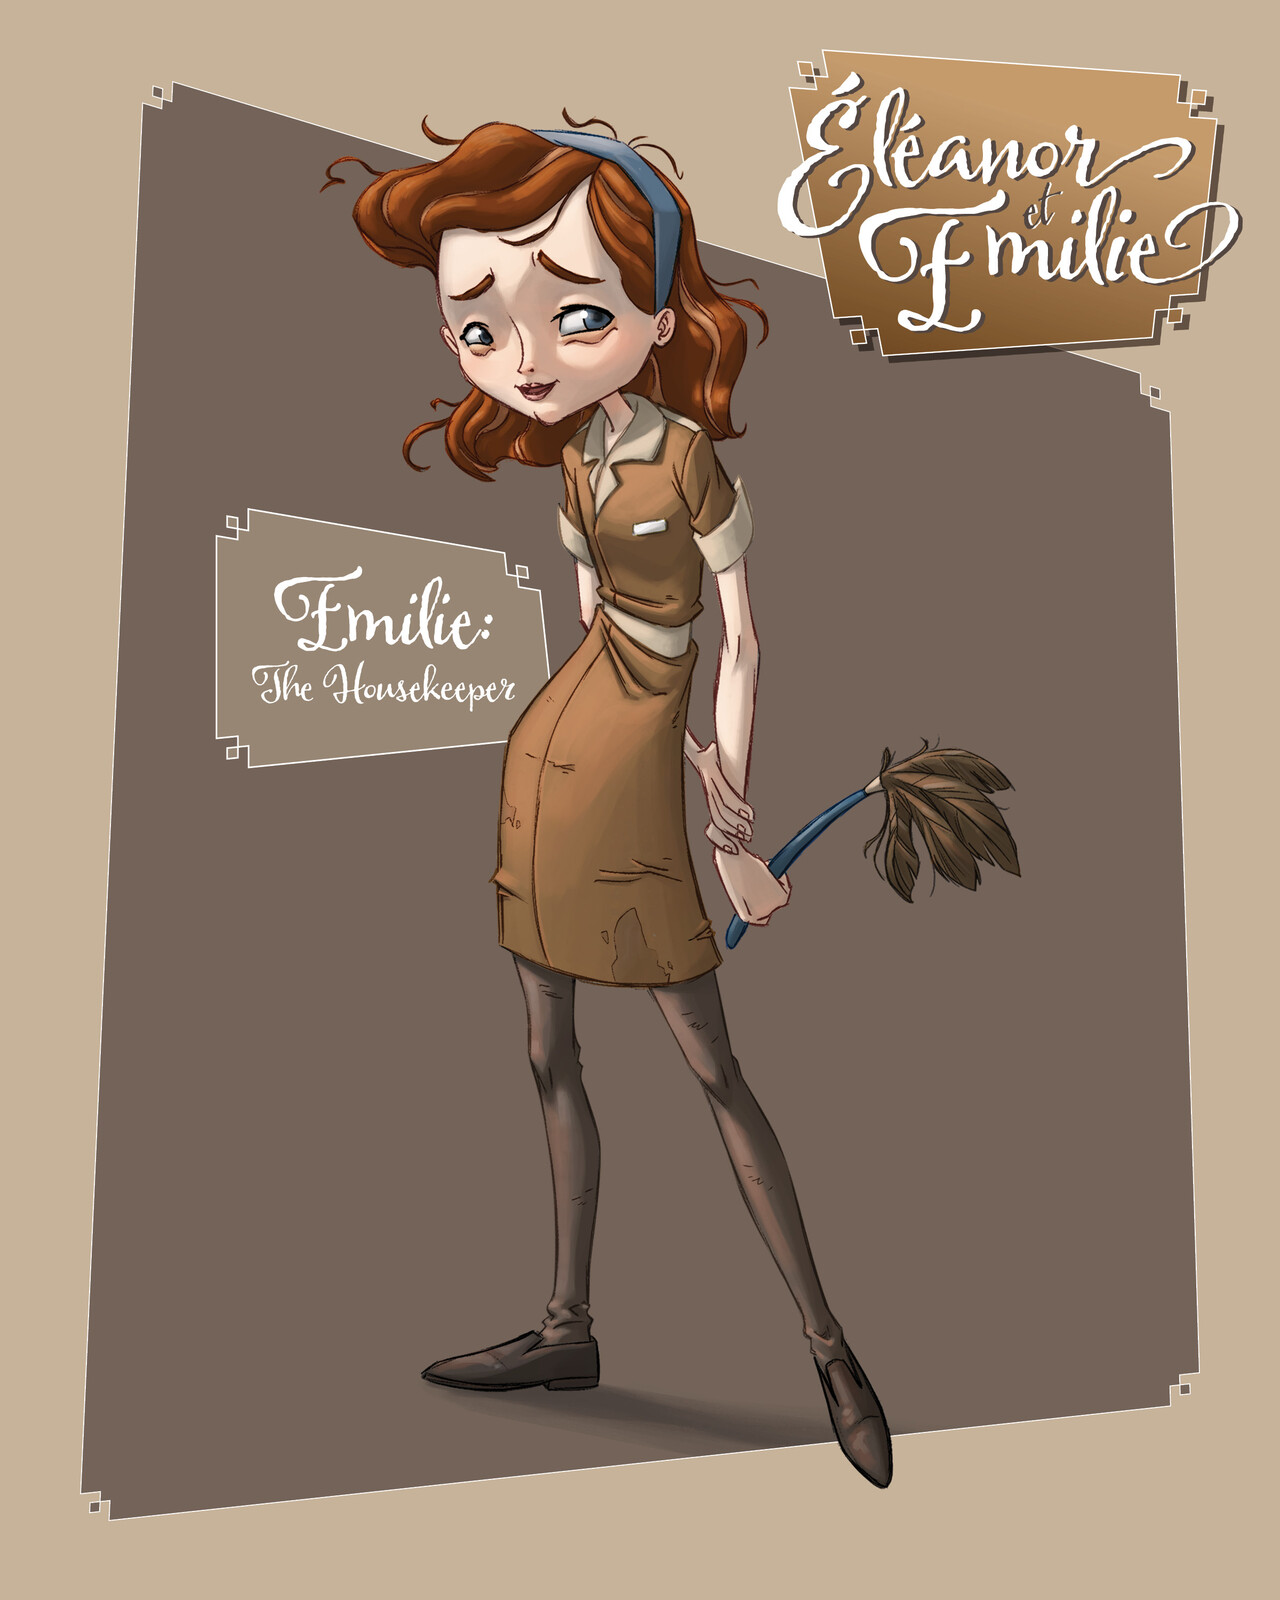 Emilie, The Housekeeper from "Éléanor et Emilie" a Feature Animation Film Concept